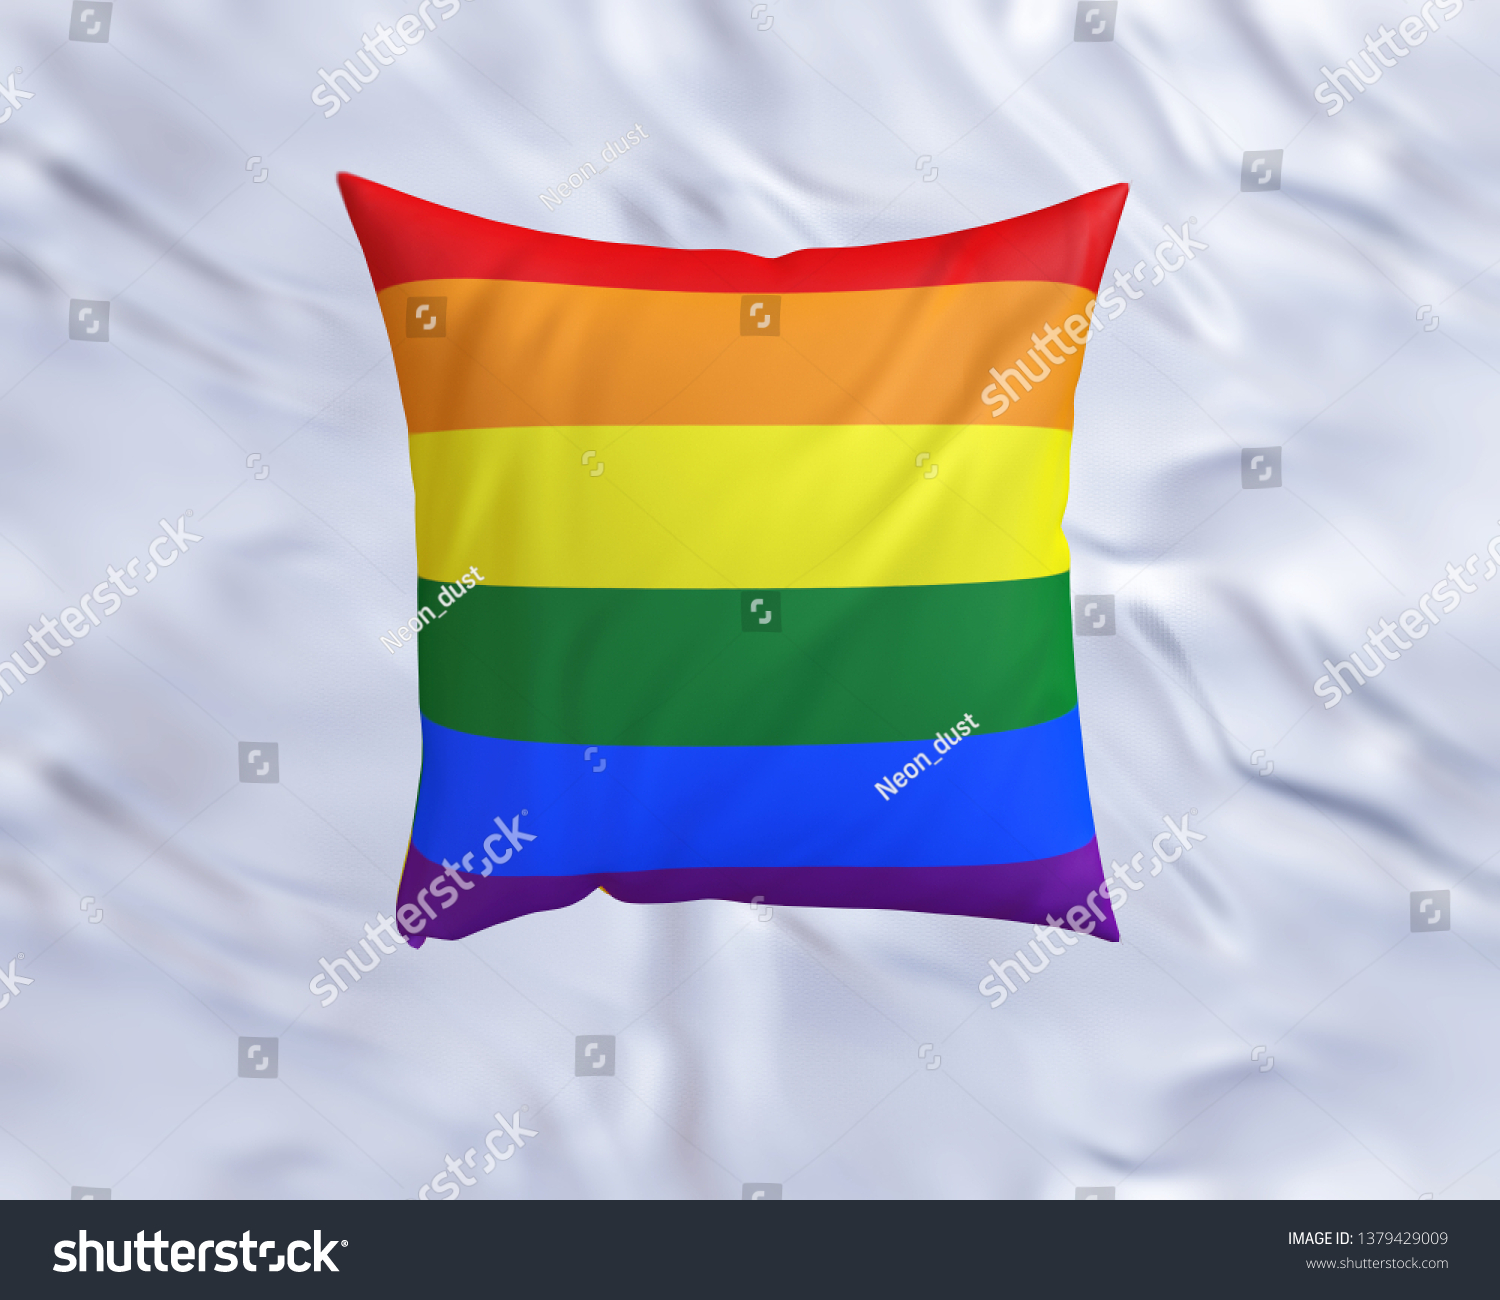 Blank Soft Square Pillow Lgbt Flag Stock Illustration 1379429009